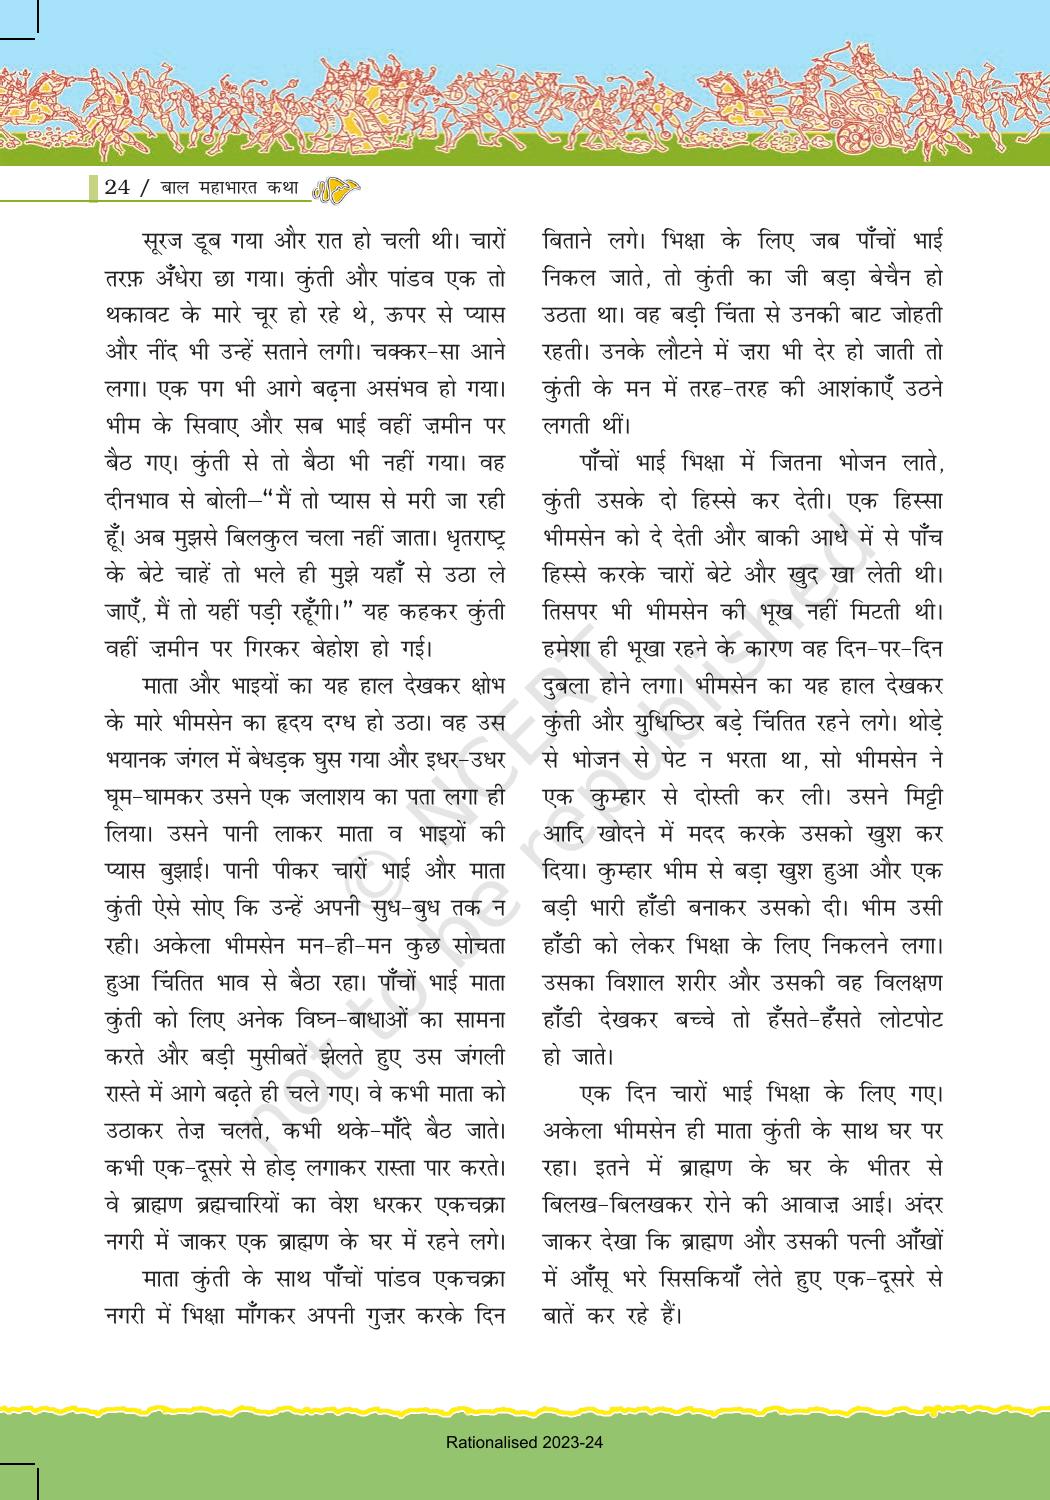 NCERT Book for Class 7 Hindi: Chapter 1-बाल महाभारत कथा - Page 24